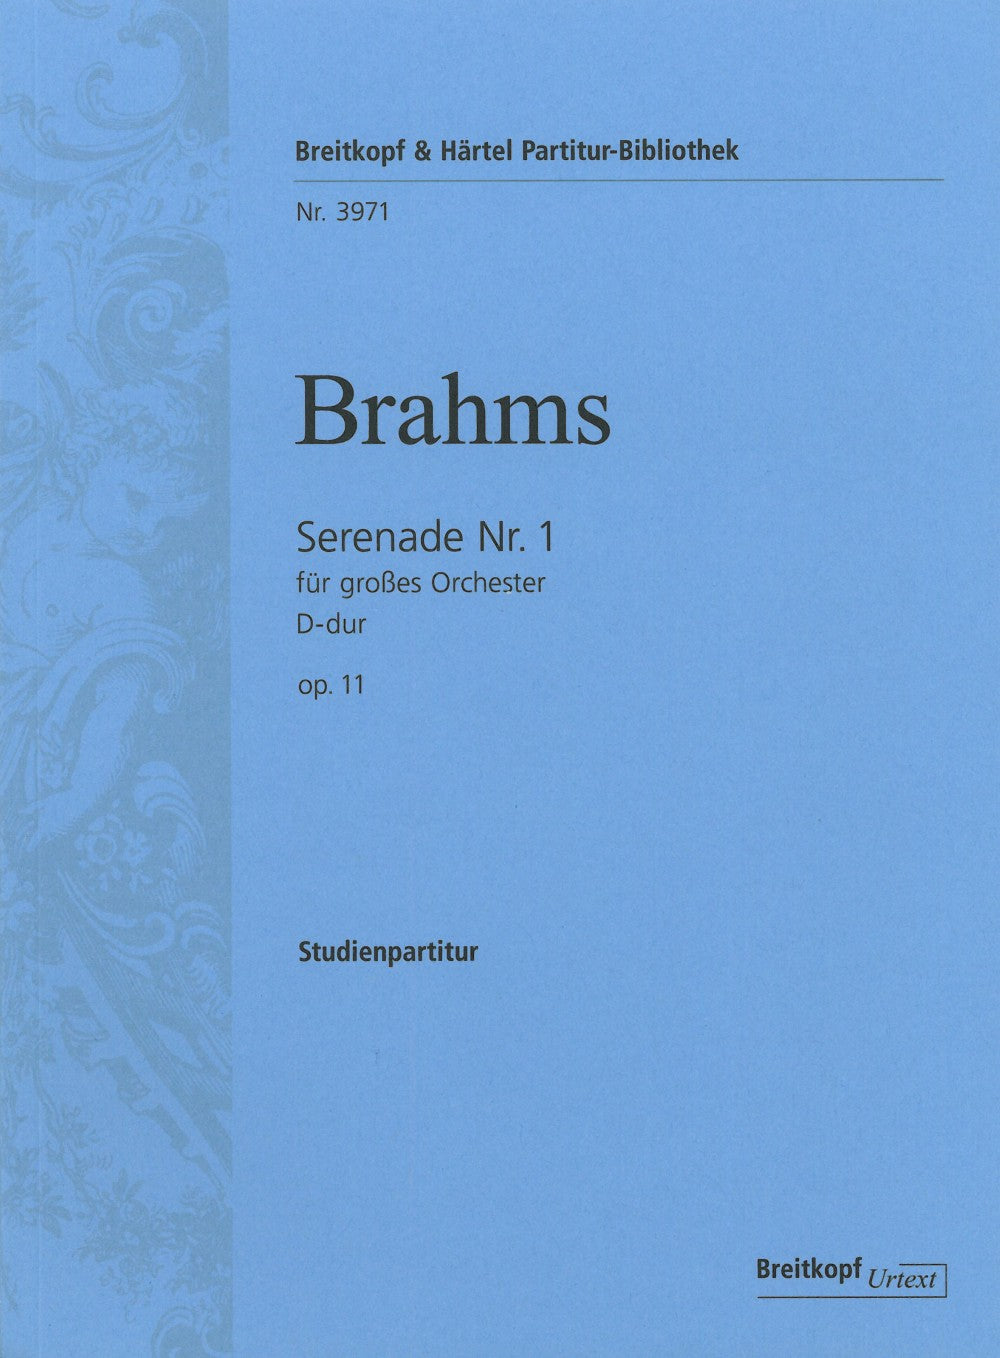 Brahms Serenade No. 1 in D major Op. 11